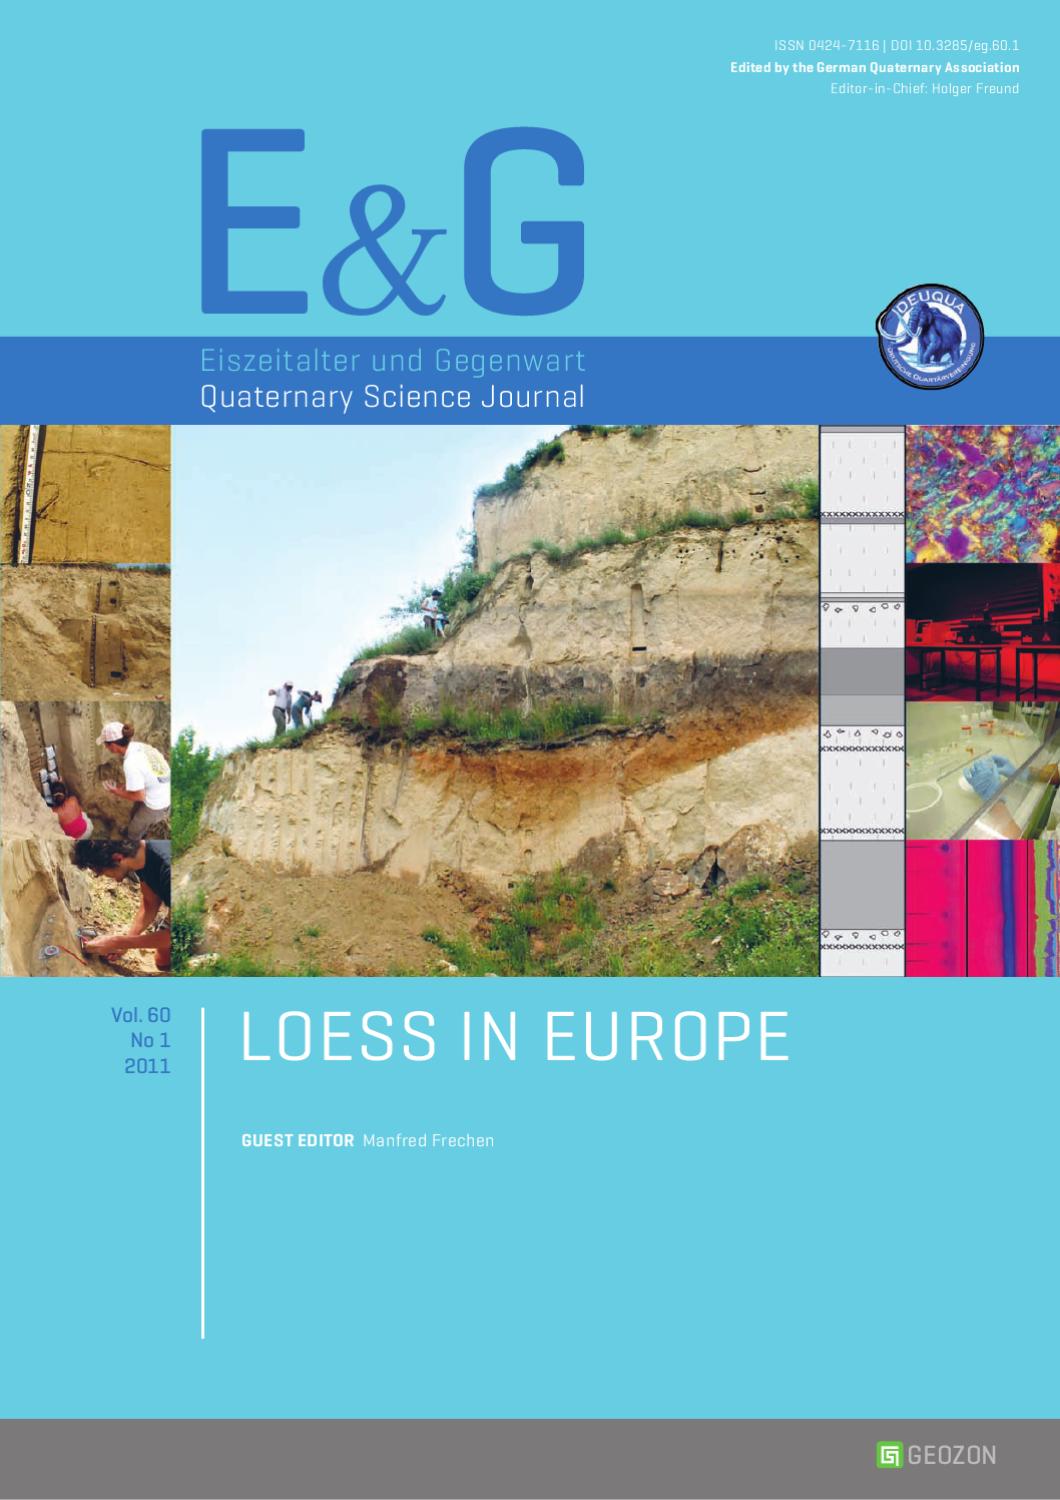 Schöne Terrassen Bilder Neu E&g – Quaternary Science Journal Vol 60 No 1 by Geozon